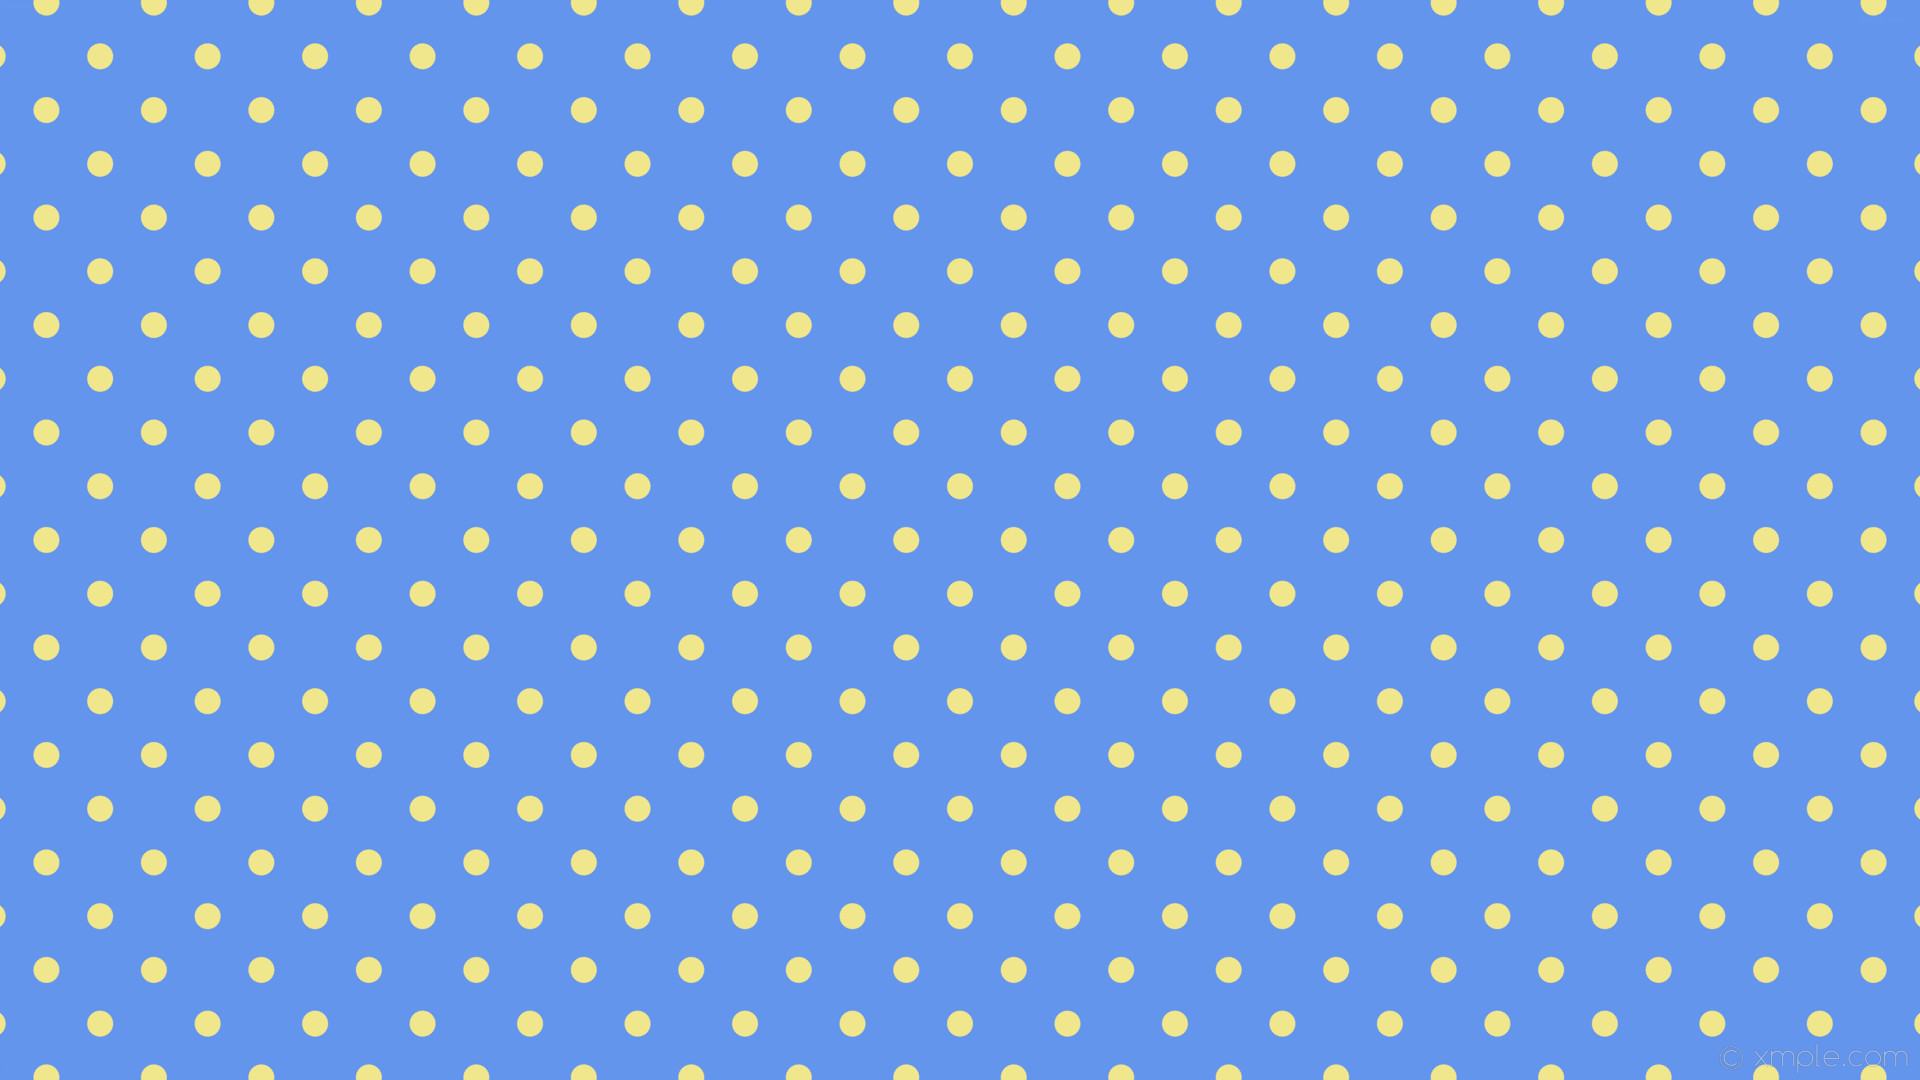 1920x1080 wallpaper blue yellow spots polka dots cornflower blue khaki #6495ed  #f0e68c 45Â° 26px